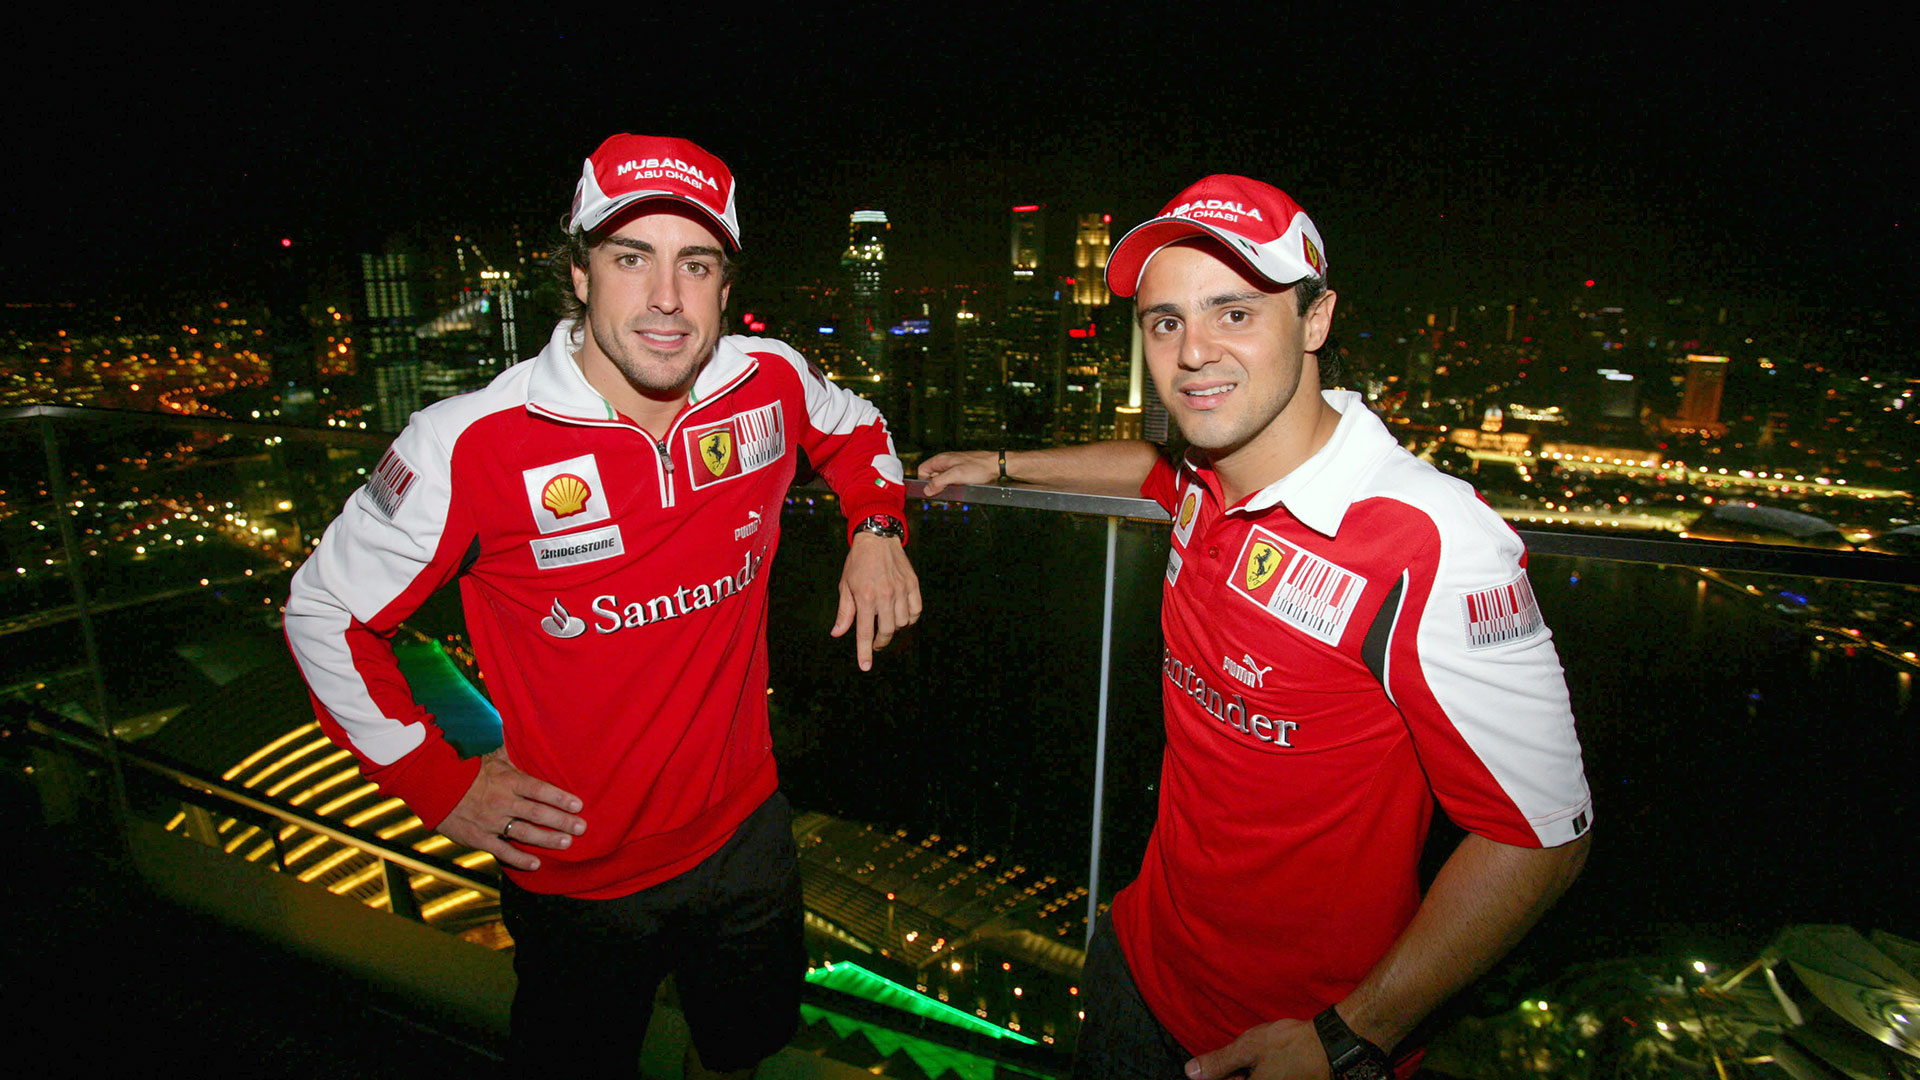 HD Wallpaper Formula Grand Prix Of Singapore F1